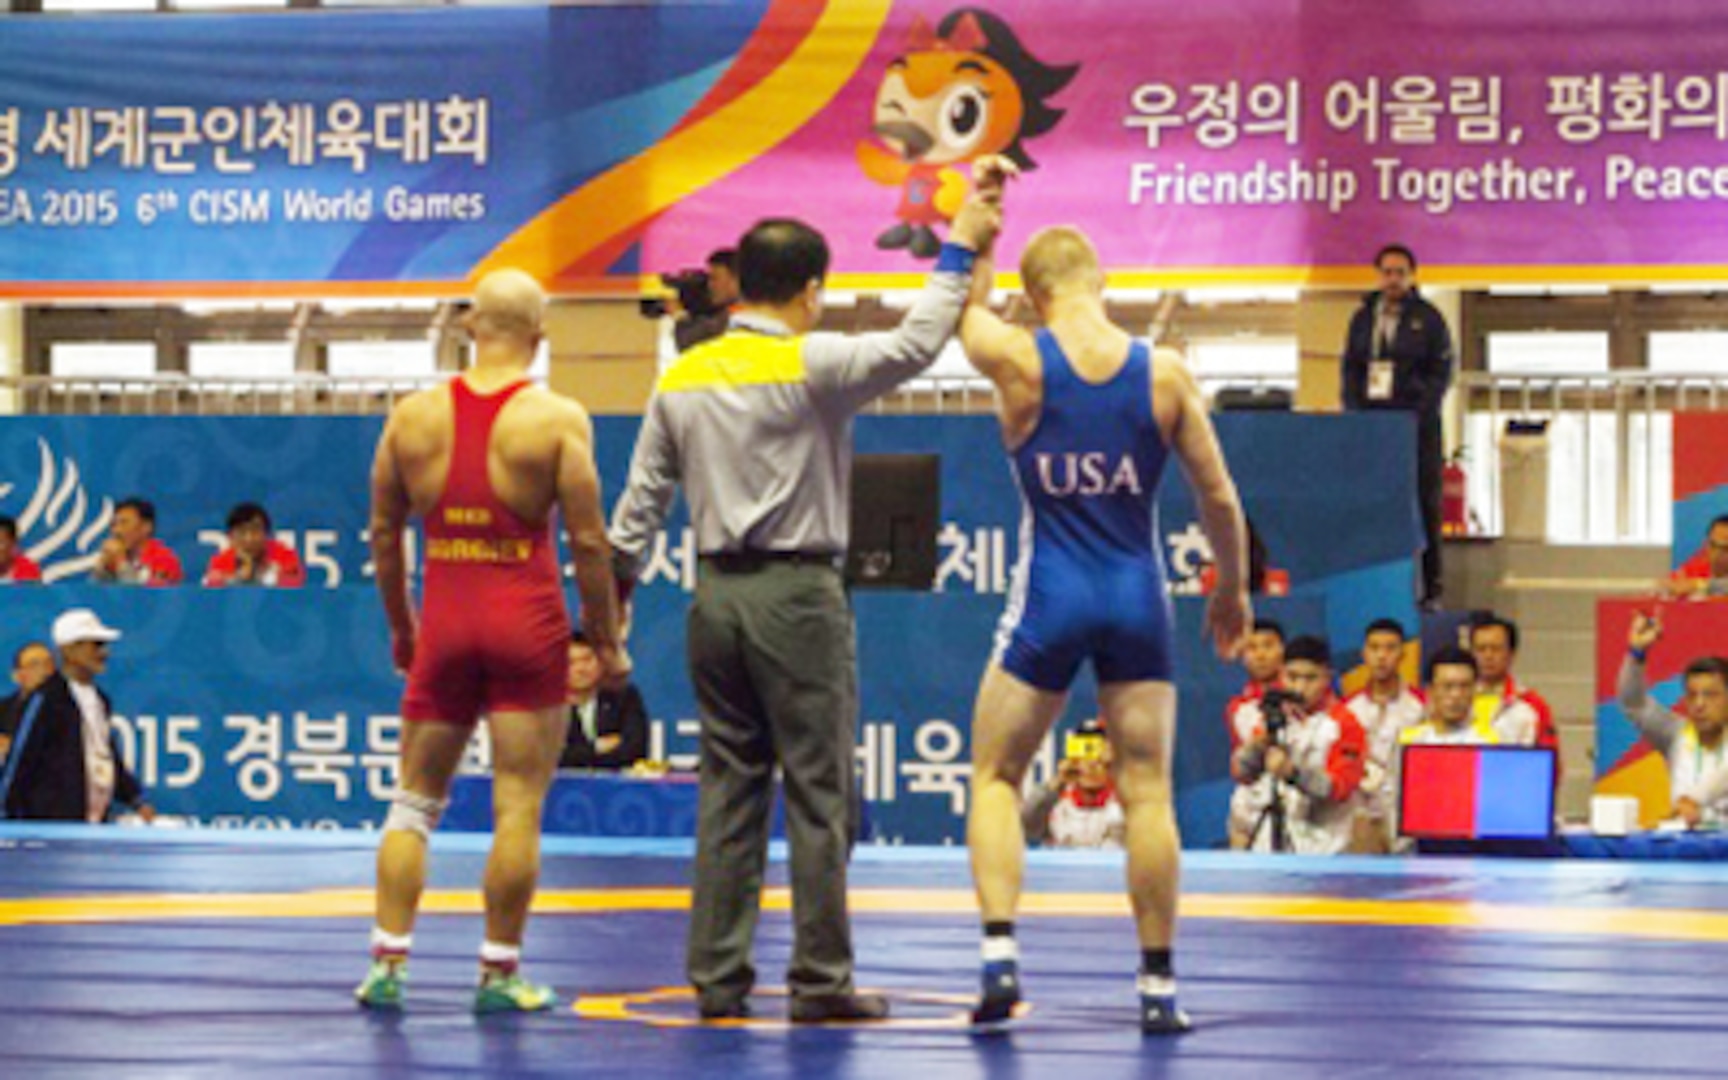 U.S. wrestler Cole VonOhlen wins the 65kg men’s freestyle wrestling match against Macedonian Ile Georgiev at the sixth CISM World Games in Mungyeong, Korea